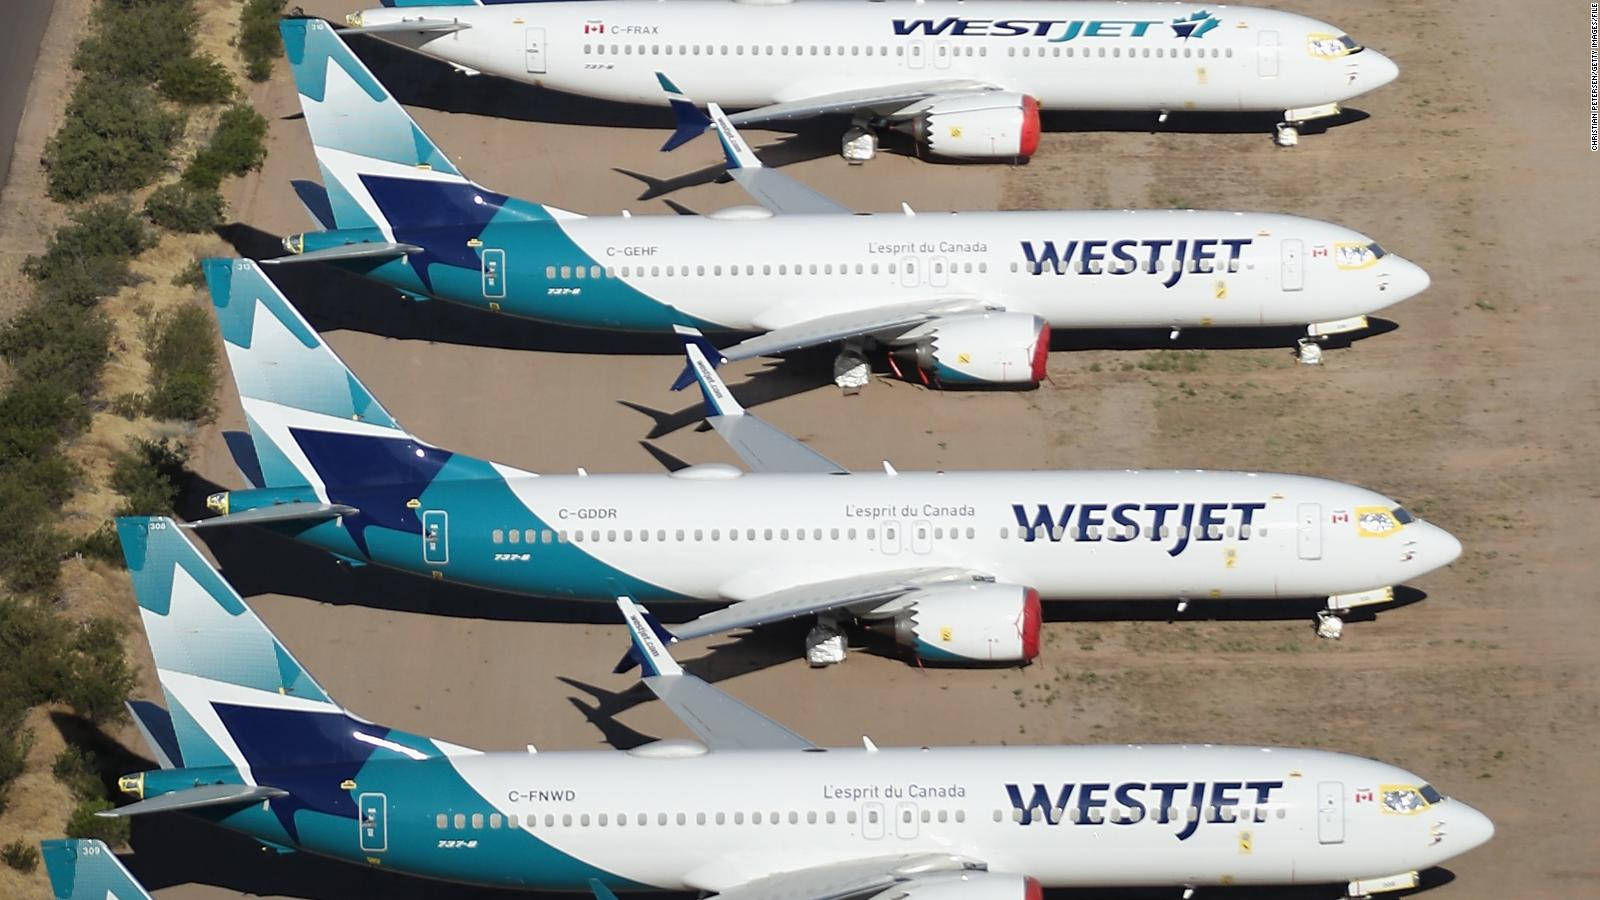 Airplanes Of Westjet Airline At Parking Ramp Wallpaper